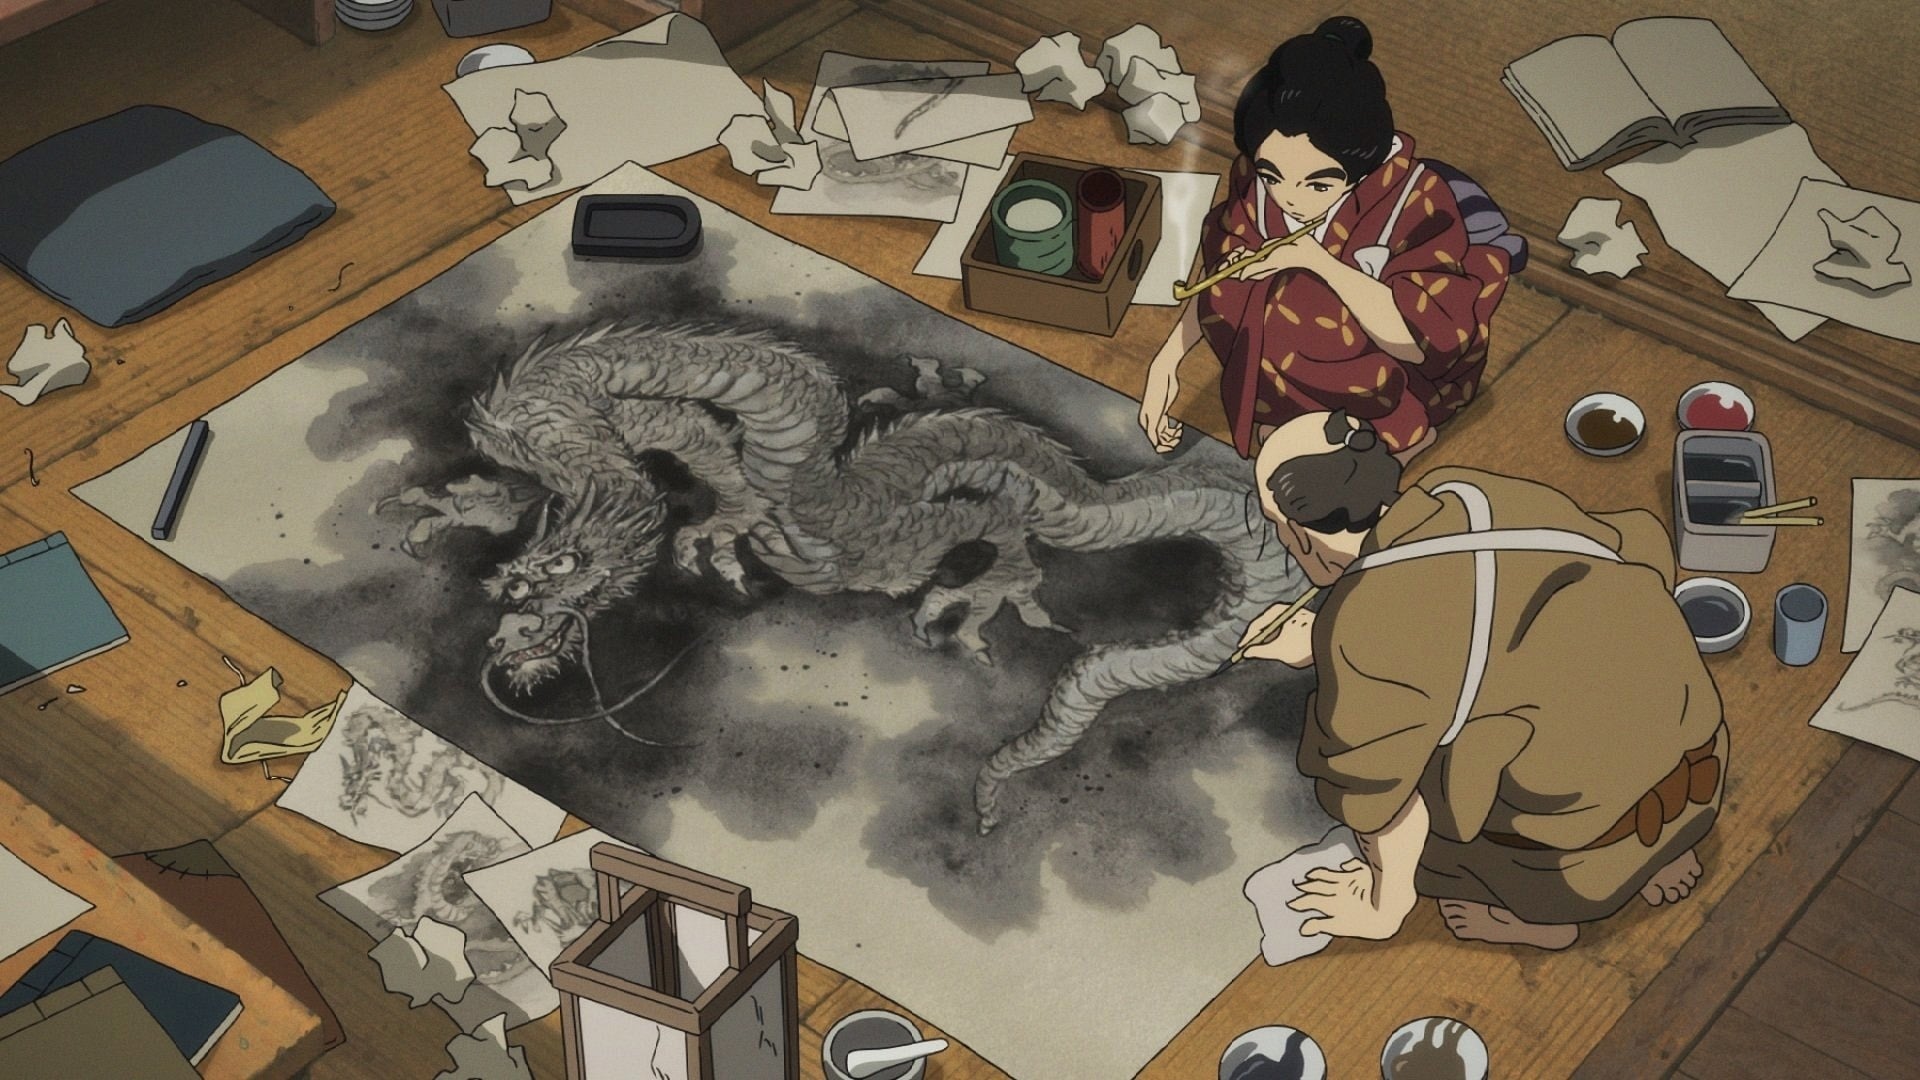 Sarusuberi Miss Hokusai